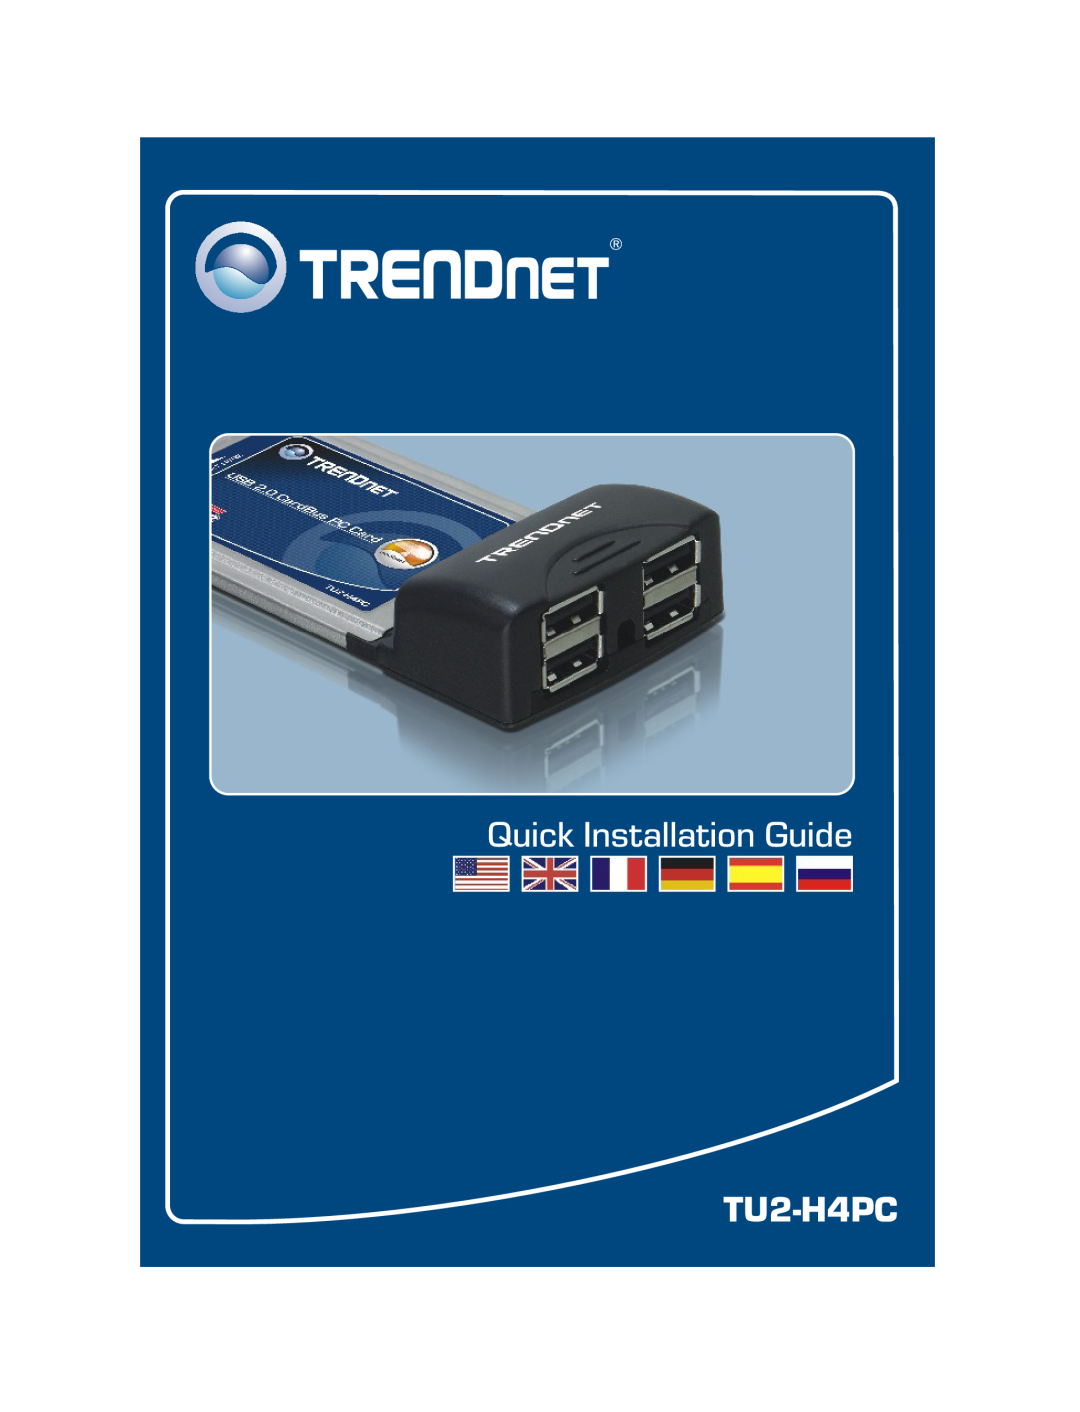 TRENDnet TU2-H4PC manual Quick Installation Guide 